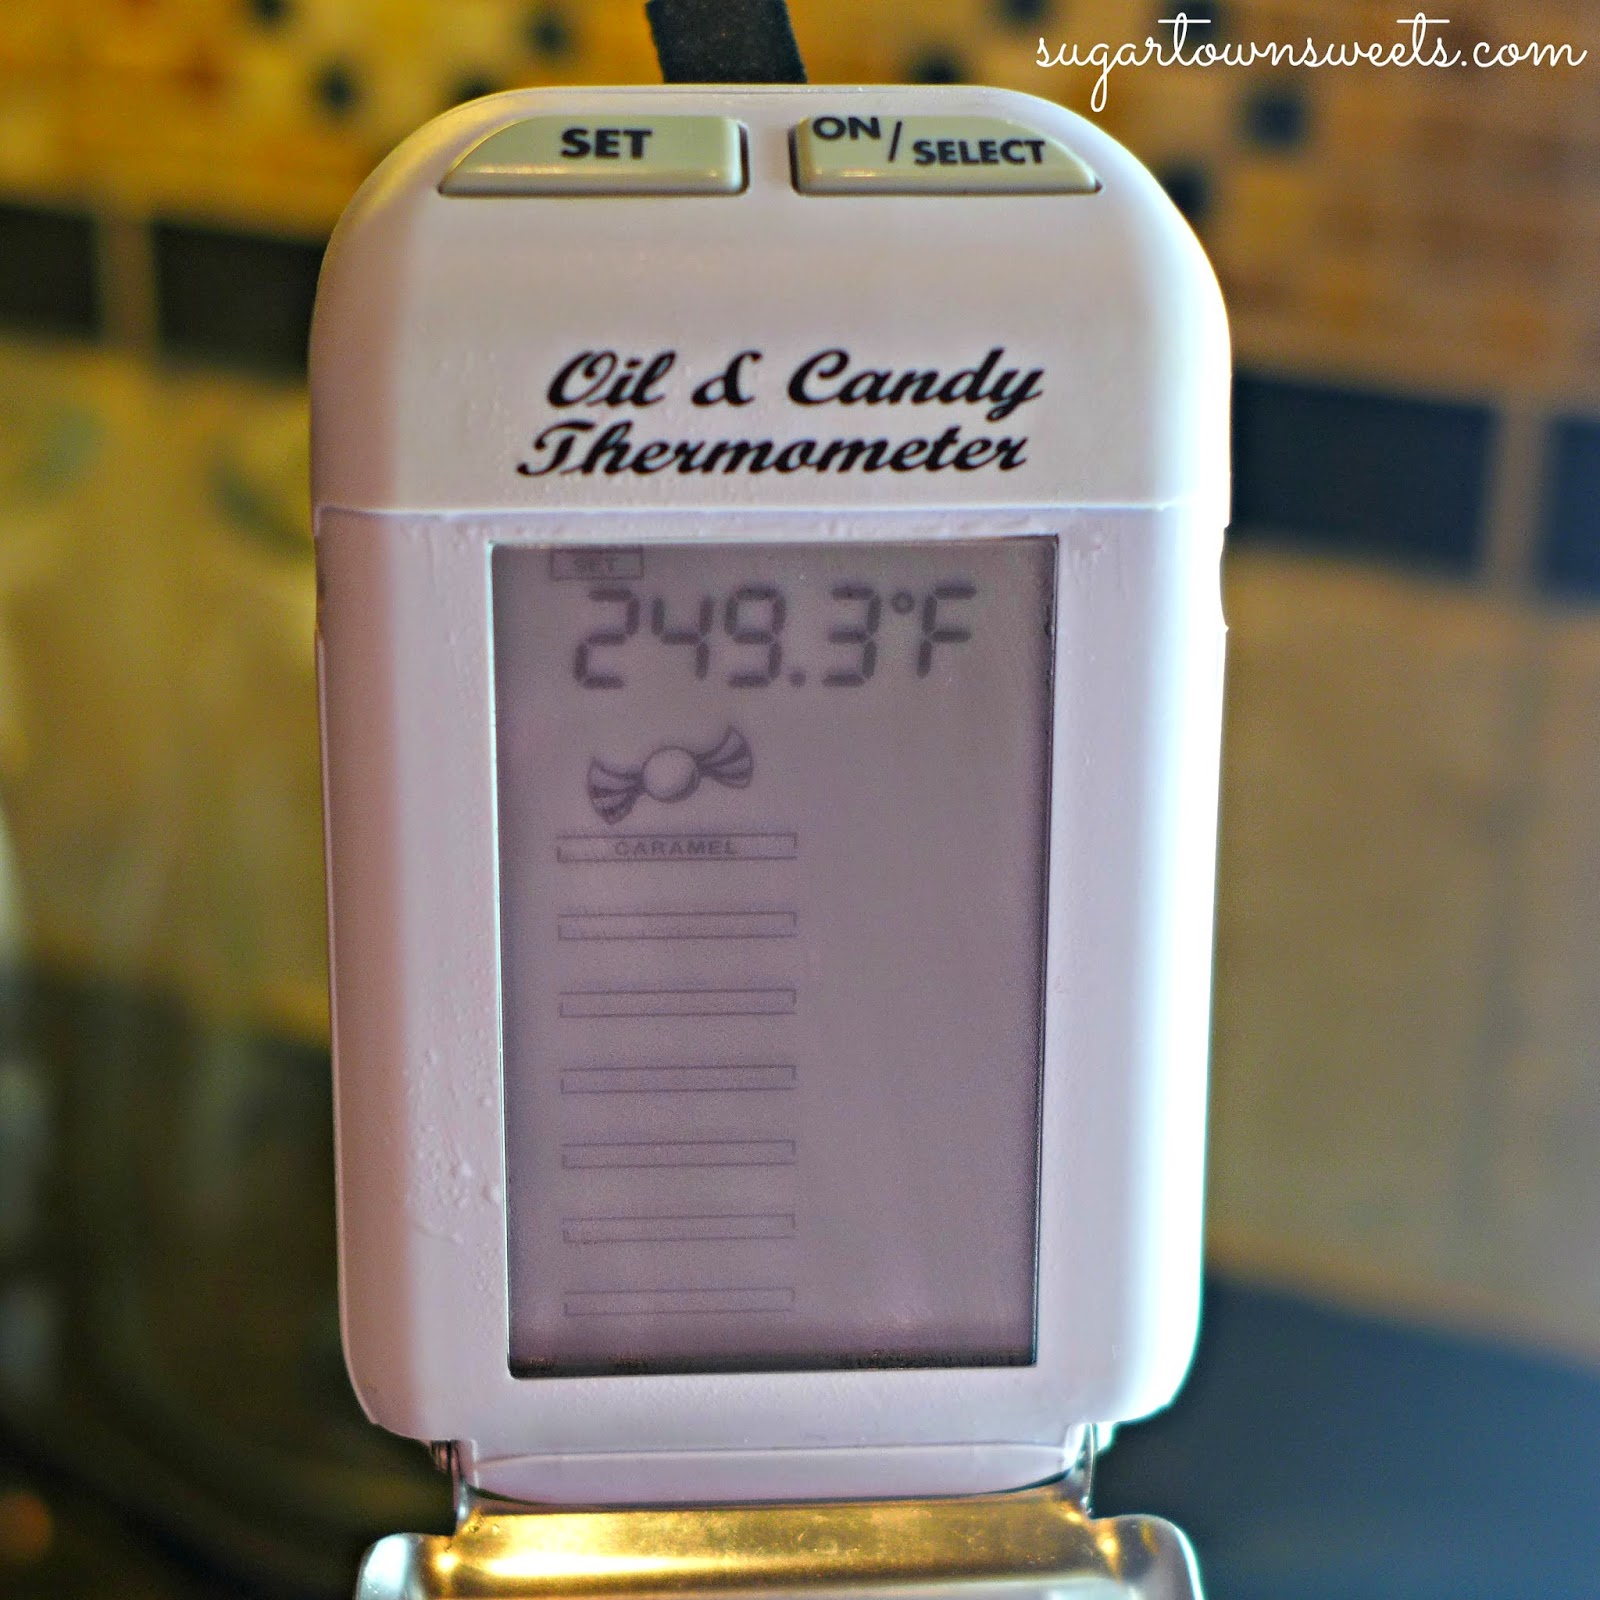 Maverick Digital Oil & Candy Thermometer